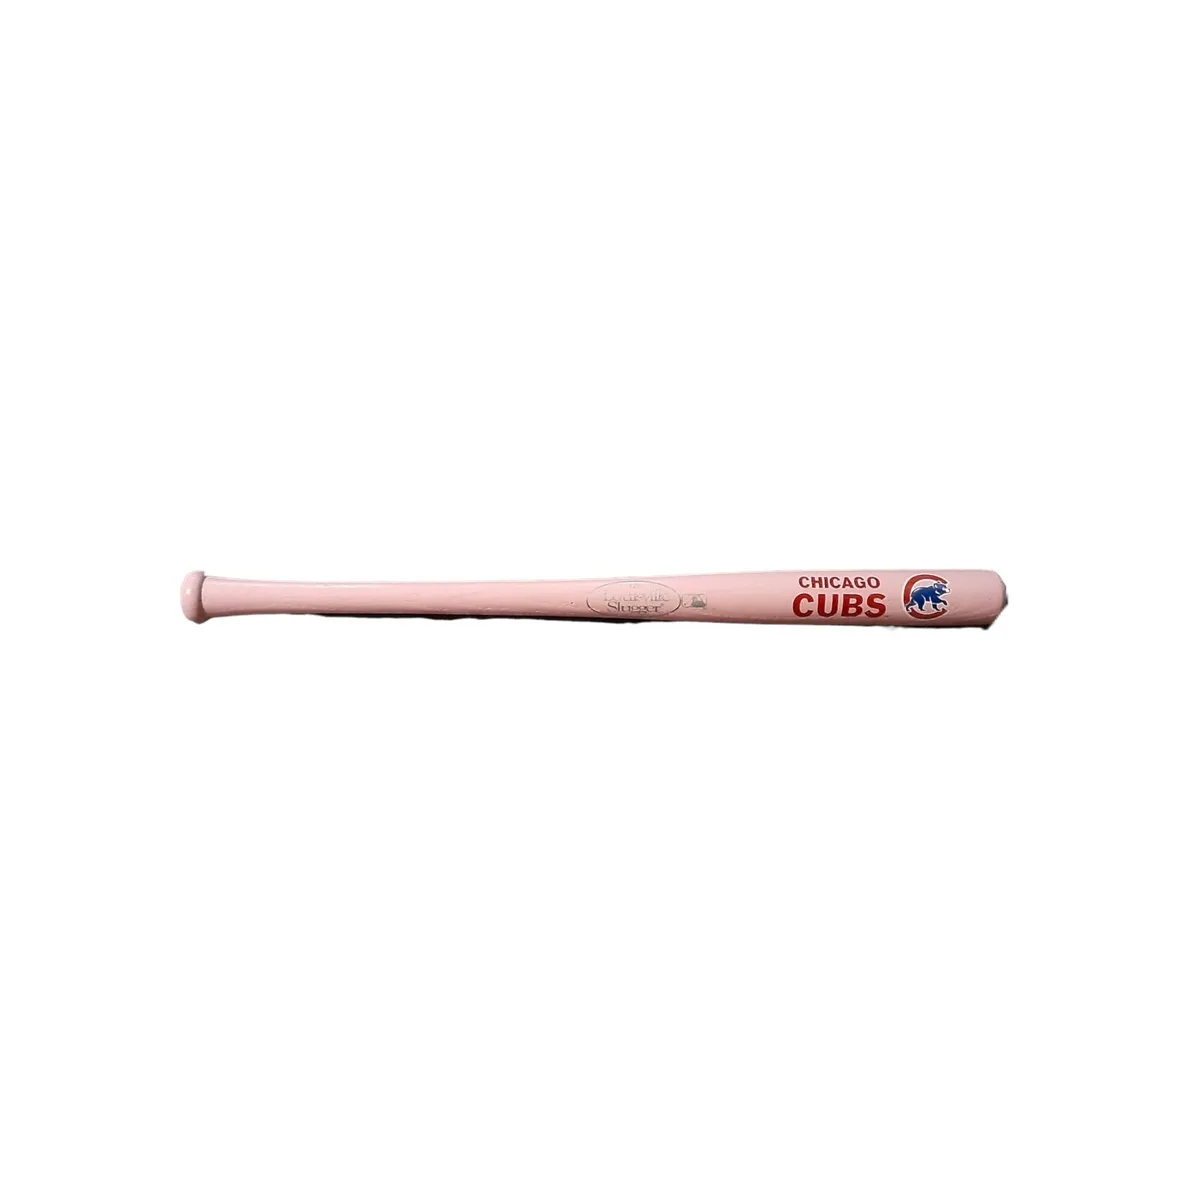 Chicago Cubs 18 Mini Louisville Slugger Bat (Pink)